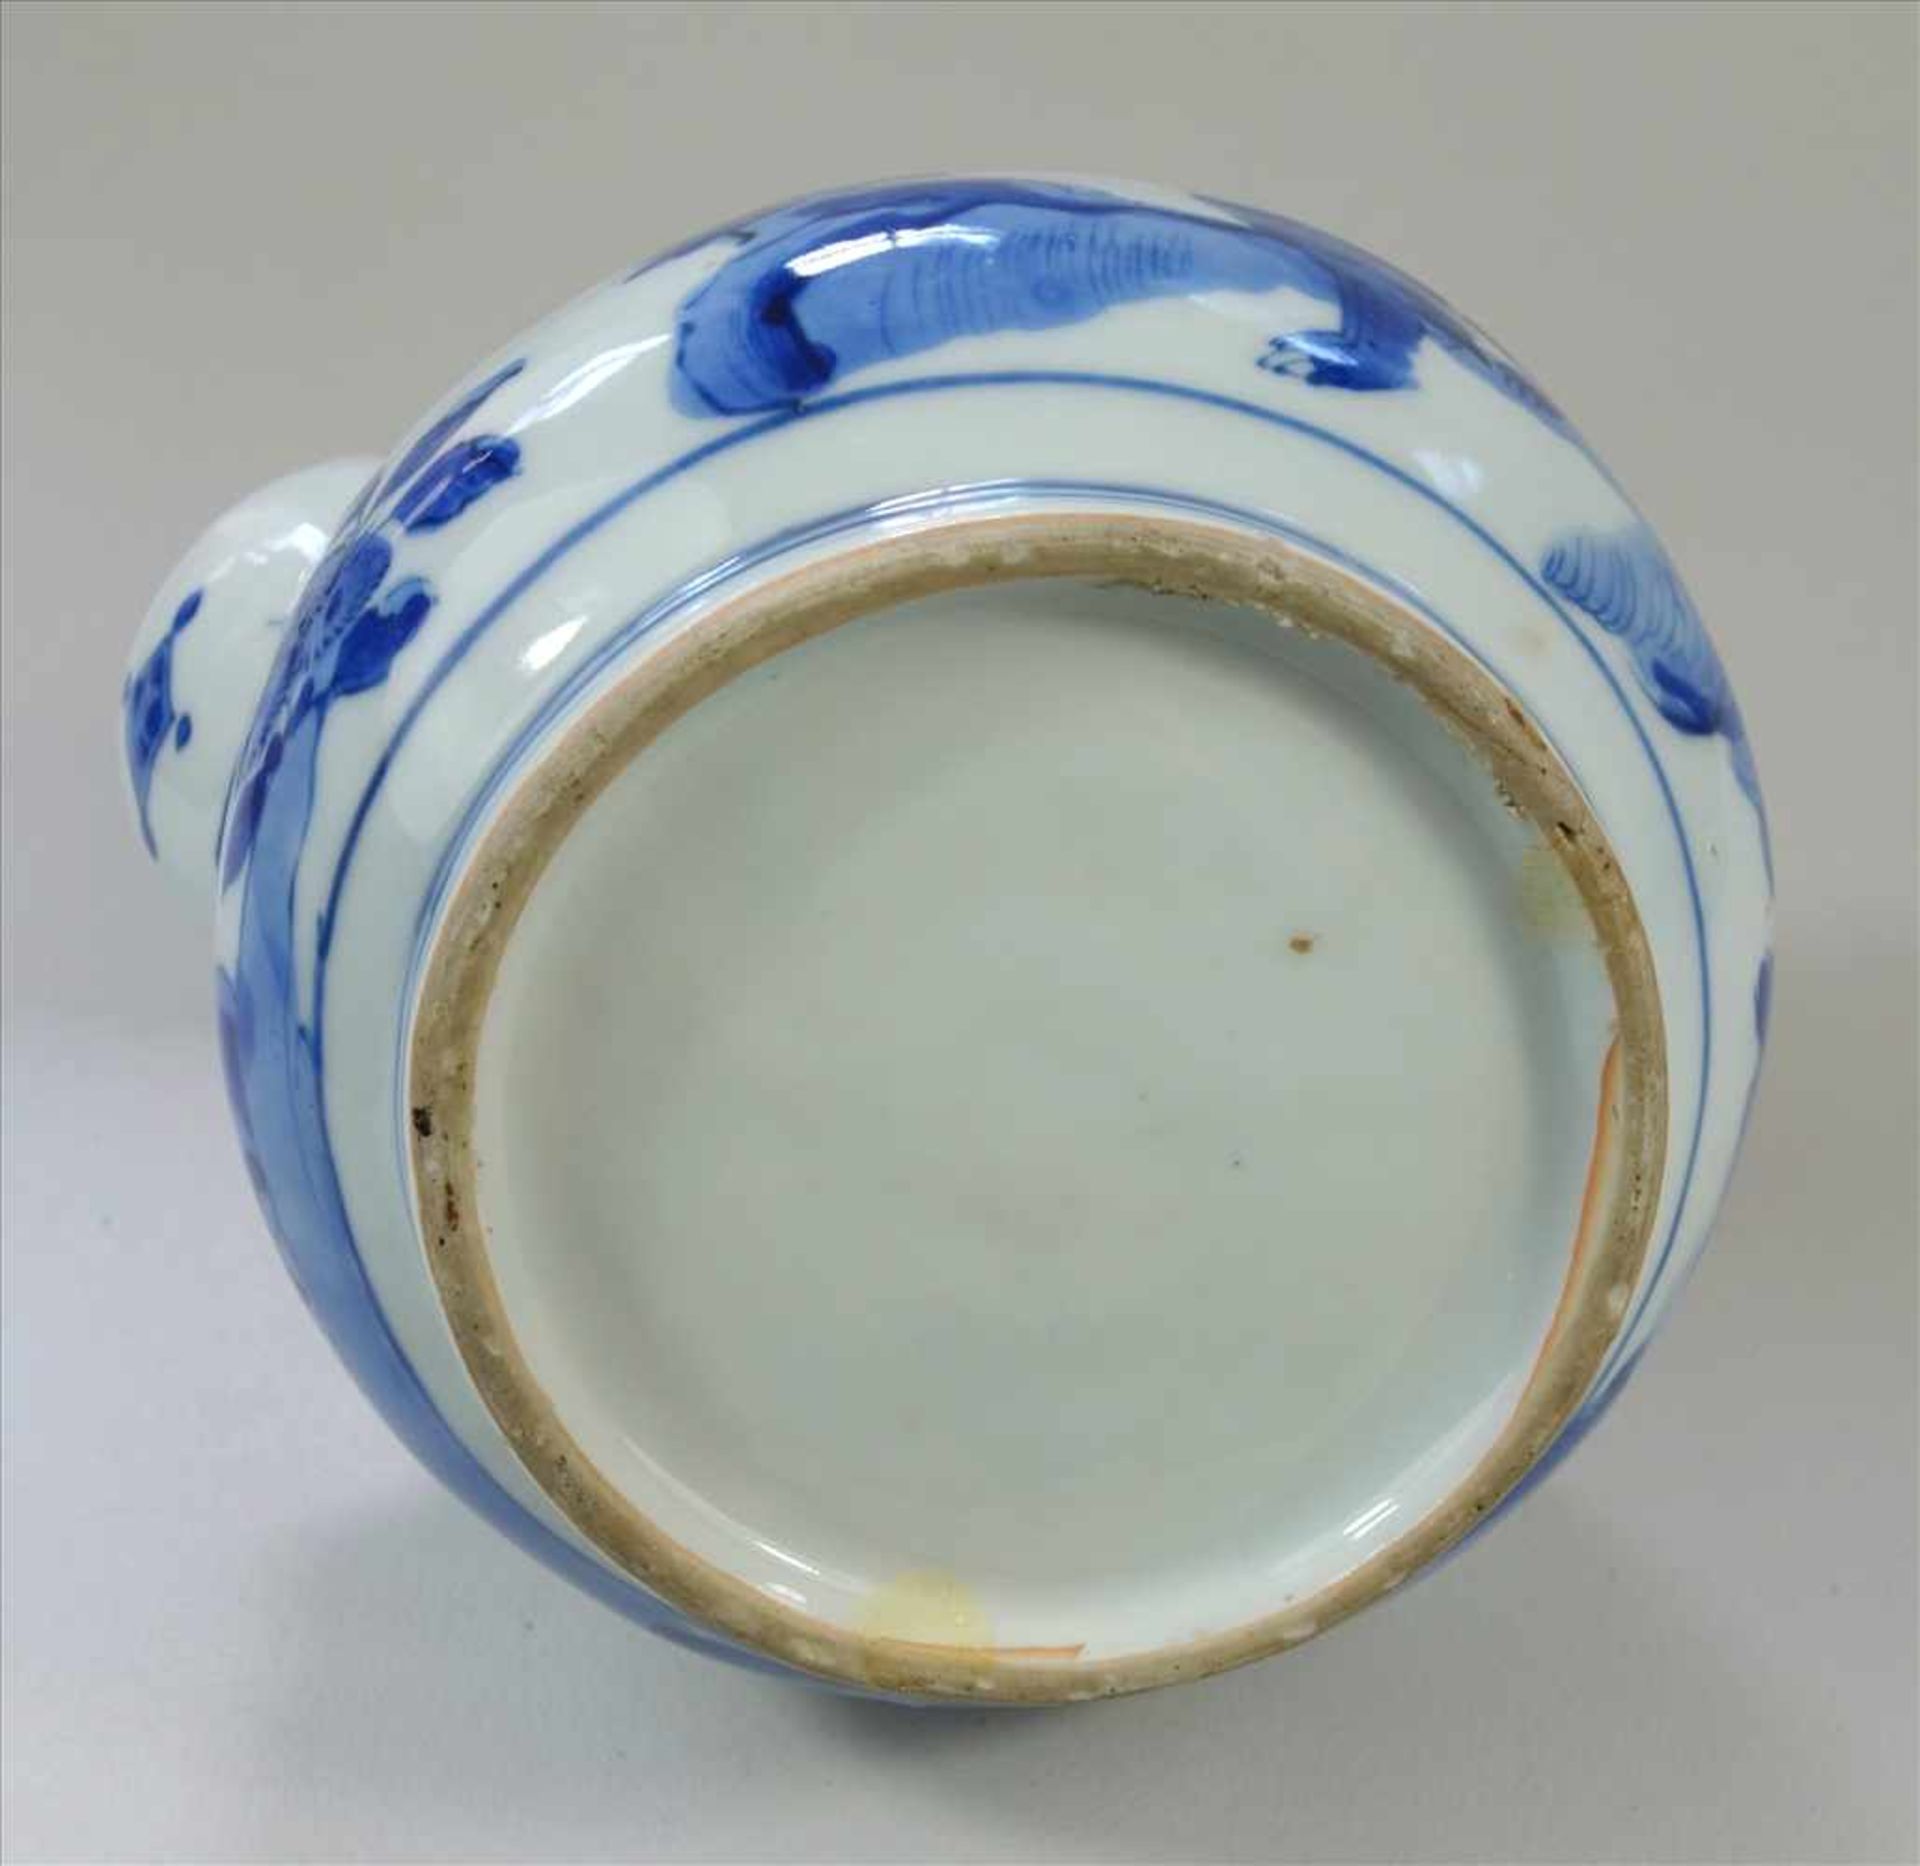 Kendi, wohl Ming, Wanli-Periode, China, 16./17.Jh., weißes Porzellan mit blauer Bemalung, vergoldete - Image 7 of 7